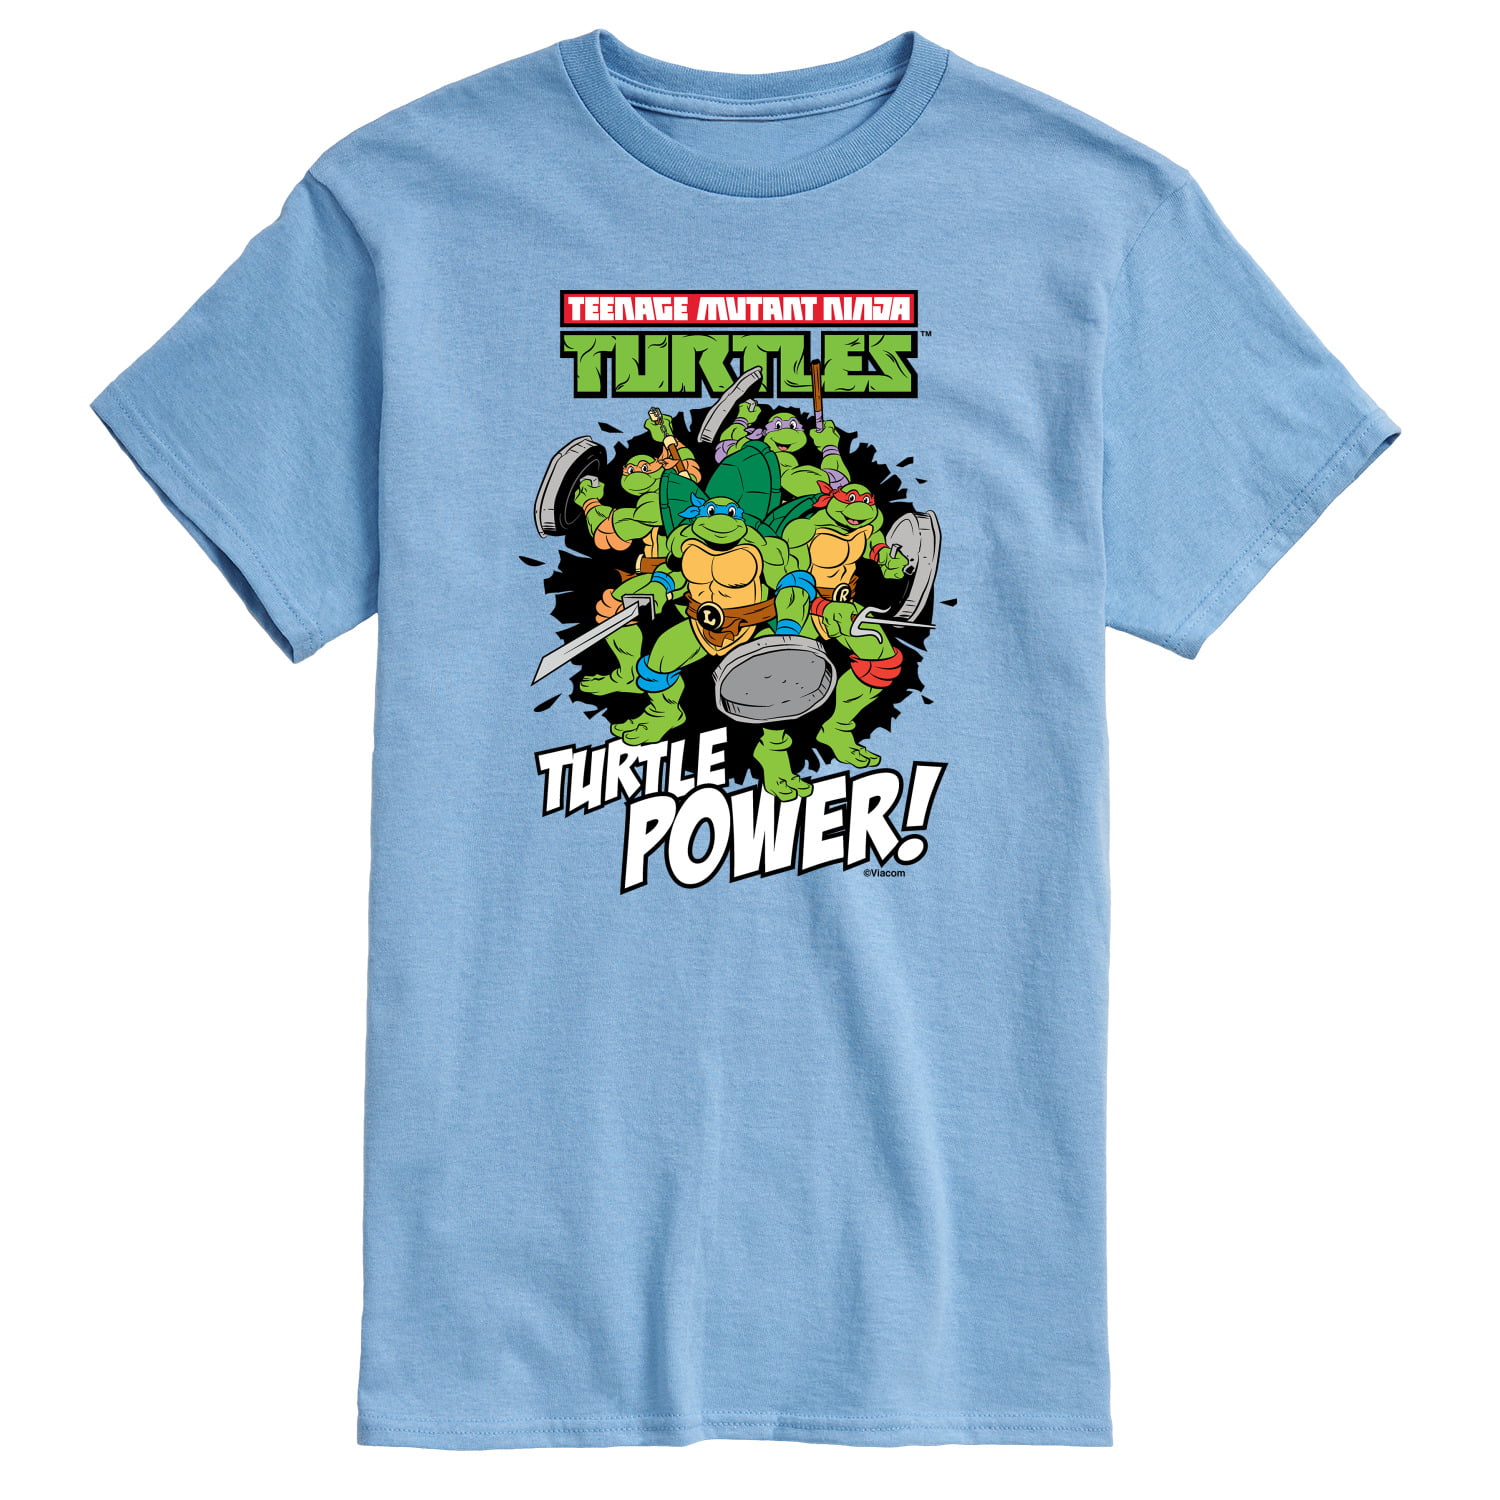 Teenage Mutant Ninja Turtles - Turtle Power - Men's Short Sleeve Graphic  T-Shirt